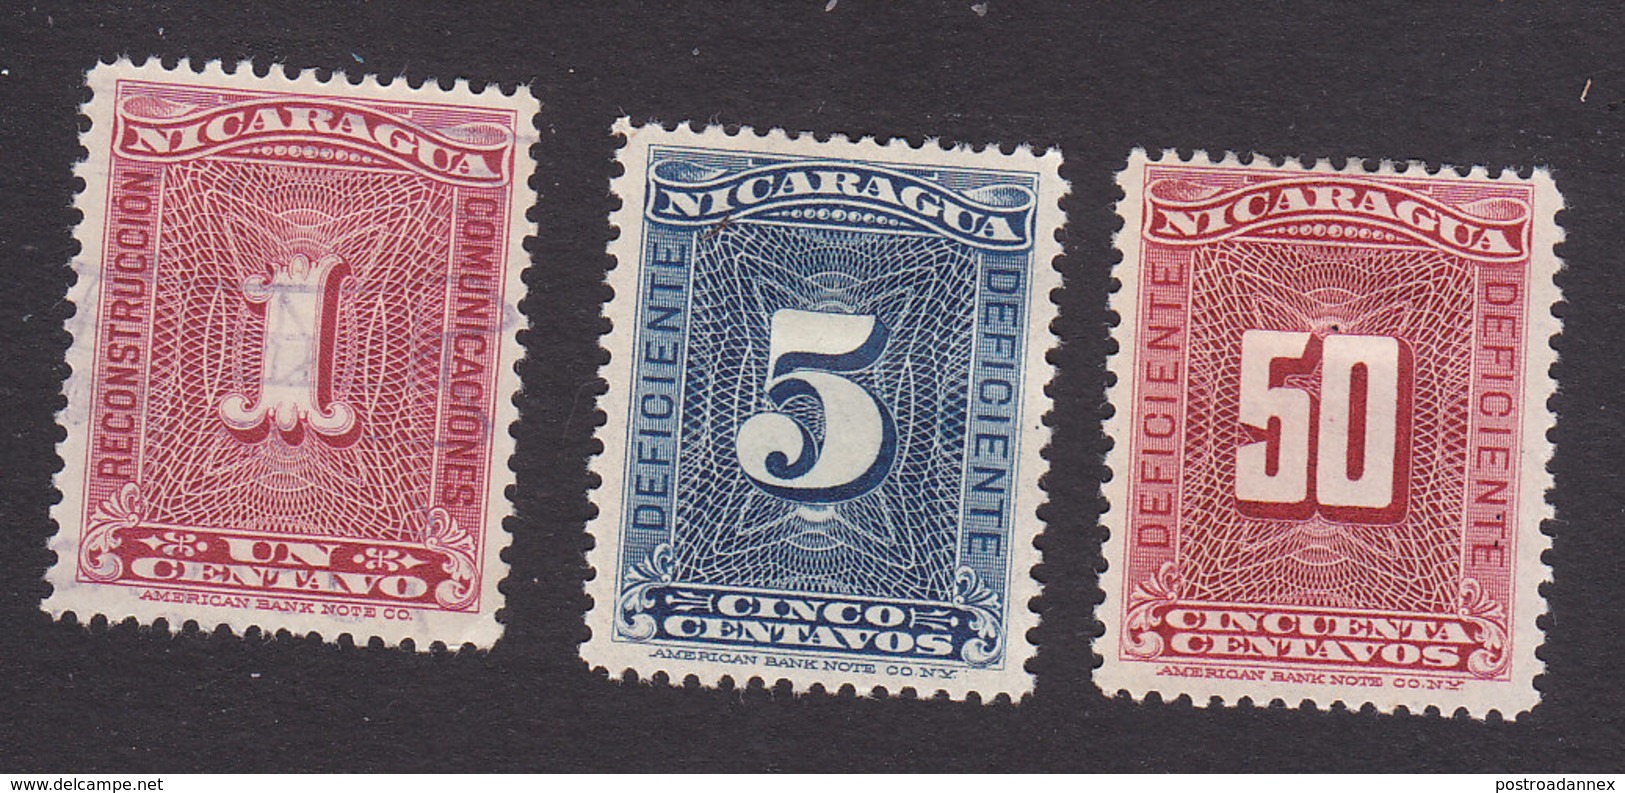 Nicaragua, Scott #J42, J44, J48, Used/Mint No Gum, Postage Due, Issued 1900 - Nicaragua